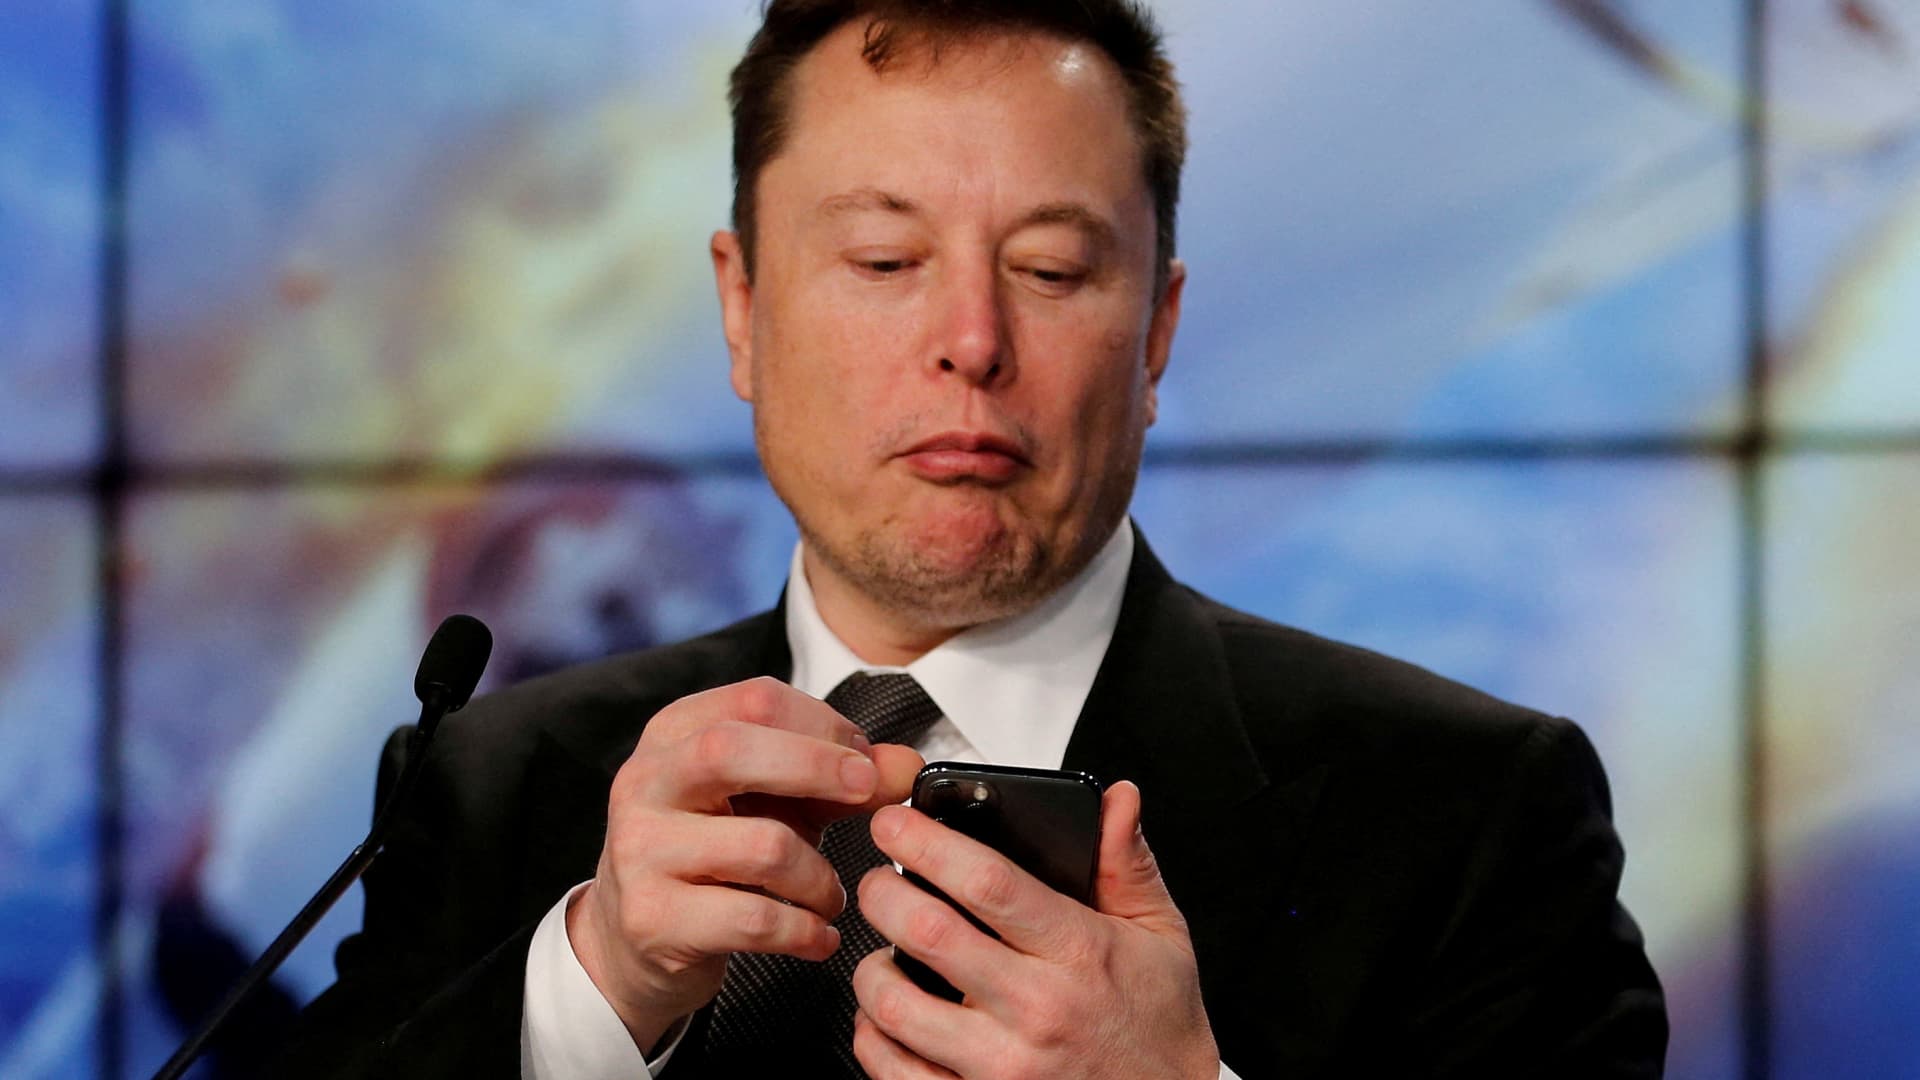 Tesla shares slide nearly 9% on demand concerns, Elon Musk's Twitter distraction